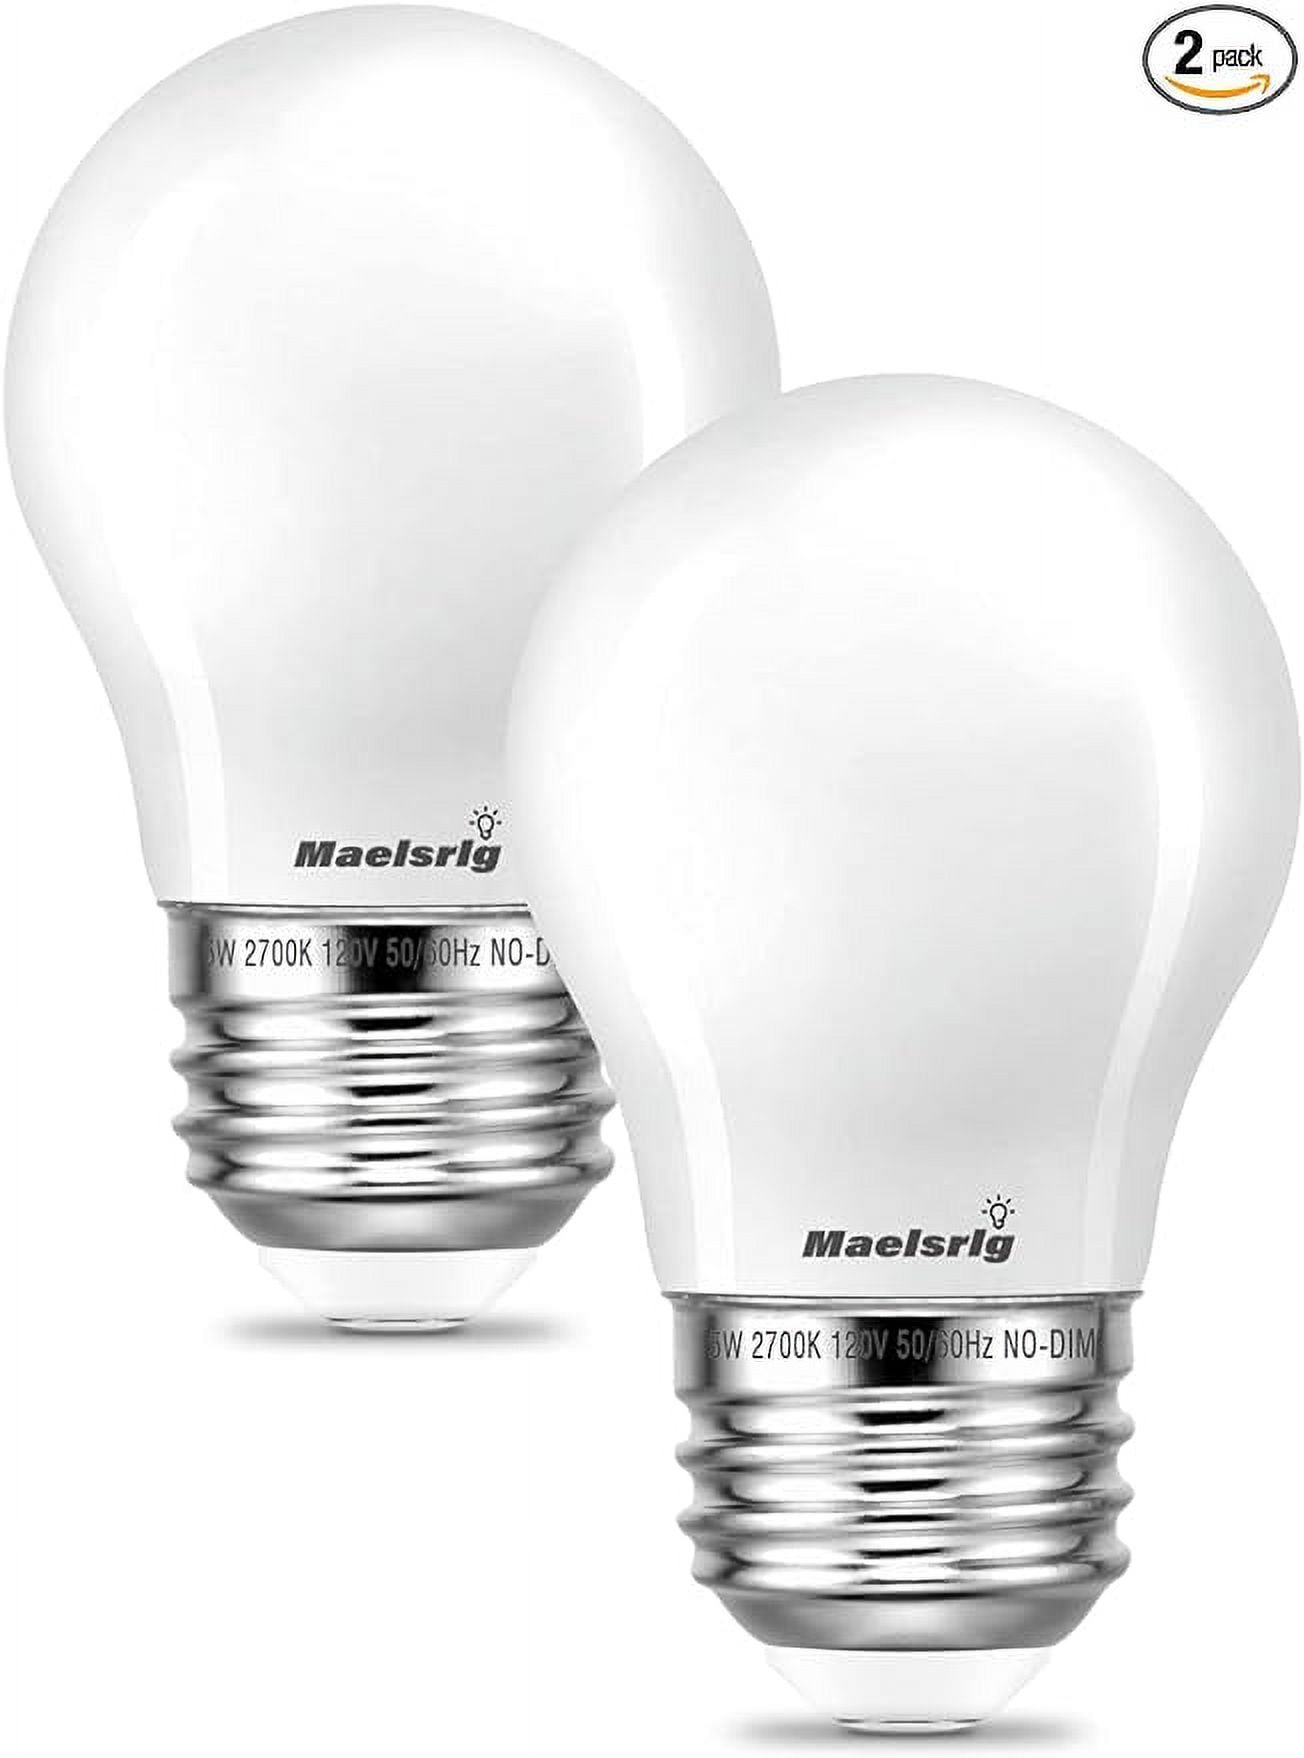  Mini E26 LED Fridge Bulb, 5W Replacement AC100-265V 3.5W  Refrigerator Bulbs, Compact Corn T10 Medium Screw Base Non-Dimmable  Waterproof Freezer Appliance Light Bulb, Daylight White 5000K, Pack of 4 :  Appliances